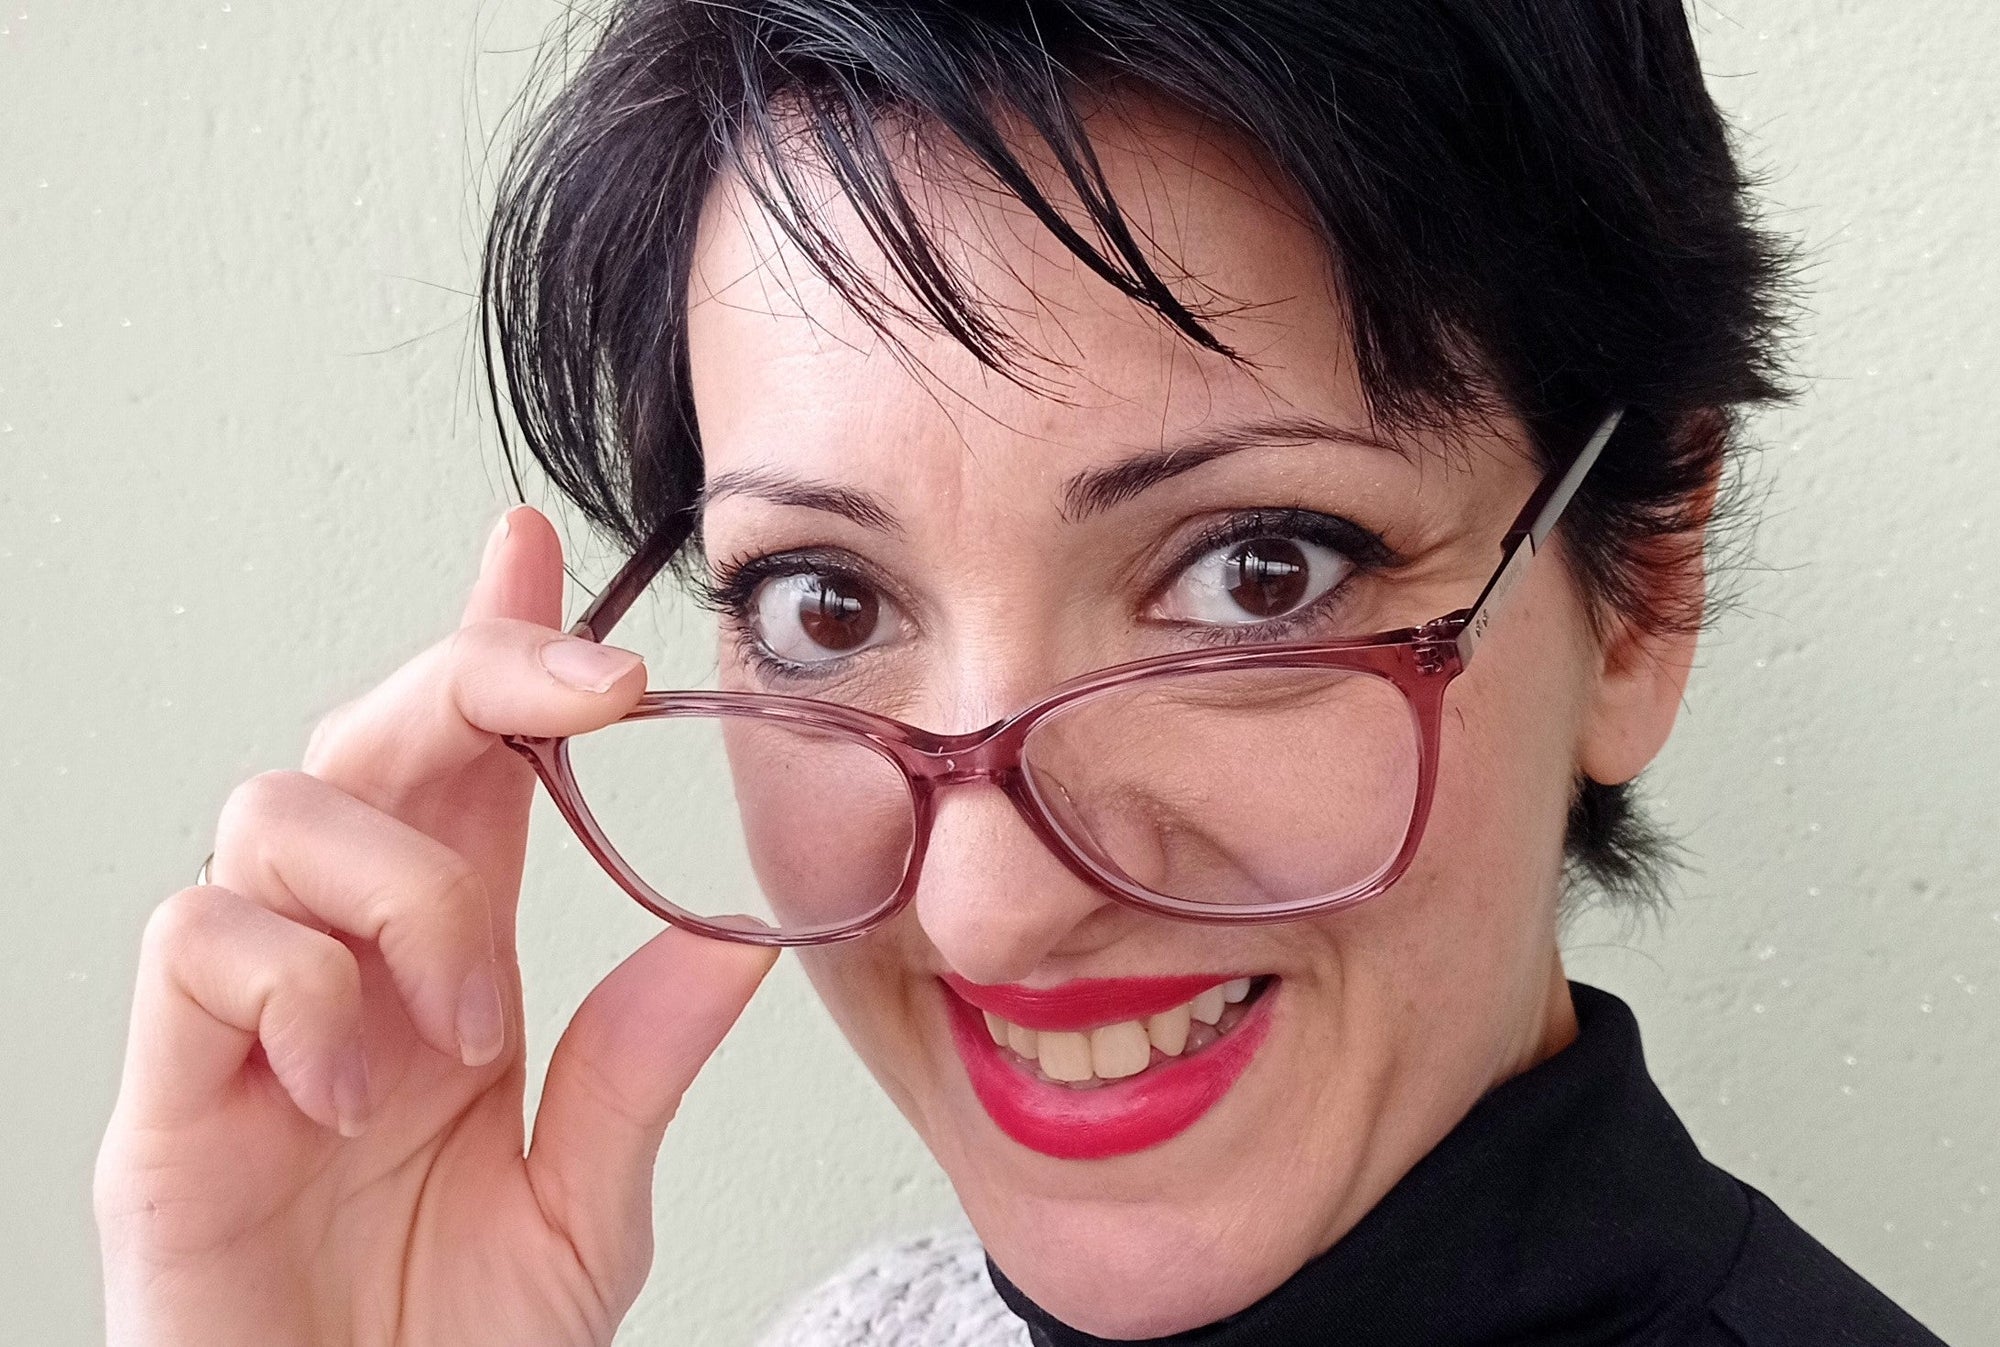 where can i get cheap eyeglasses? | KOALAEYE OPTICAL